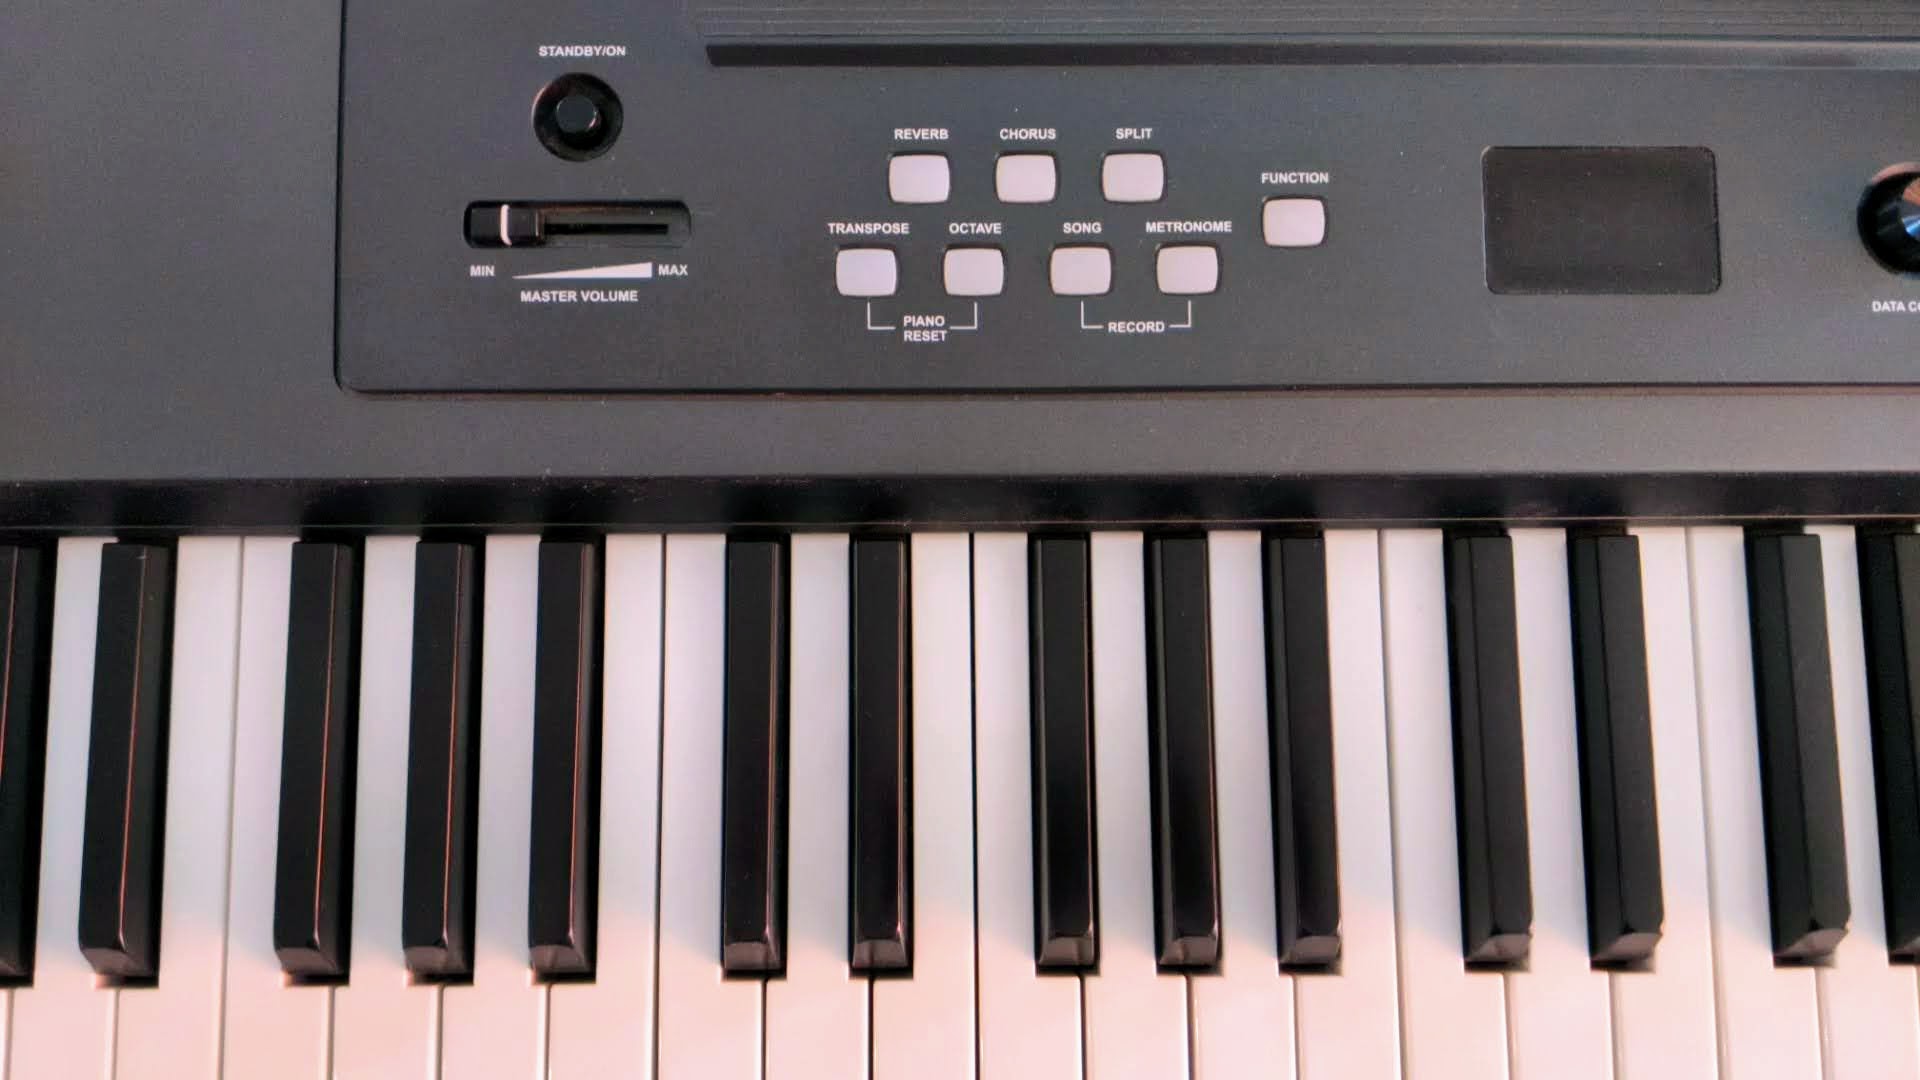 Solistos  Piano digital WOODBRASS XP2 BK